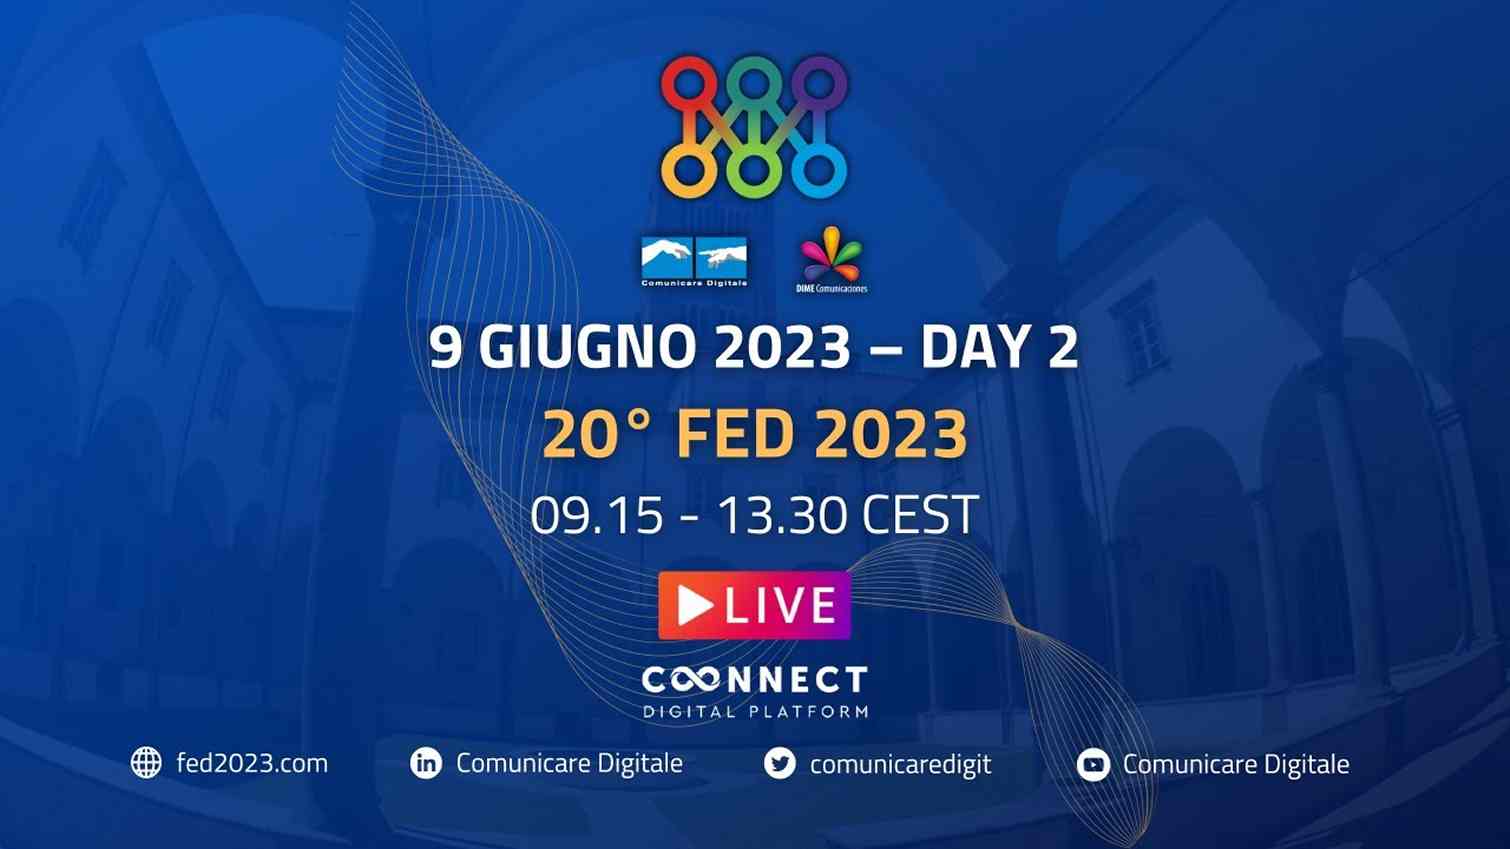 Foto - 20 Forum Europeo Digitale, Lucca 2023 #2, diretta streaming Digital-News.it - 9 Giugno | #FED2023